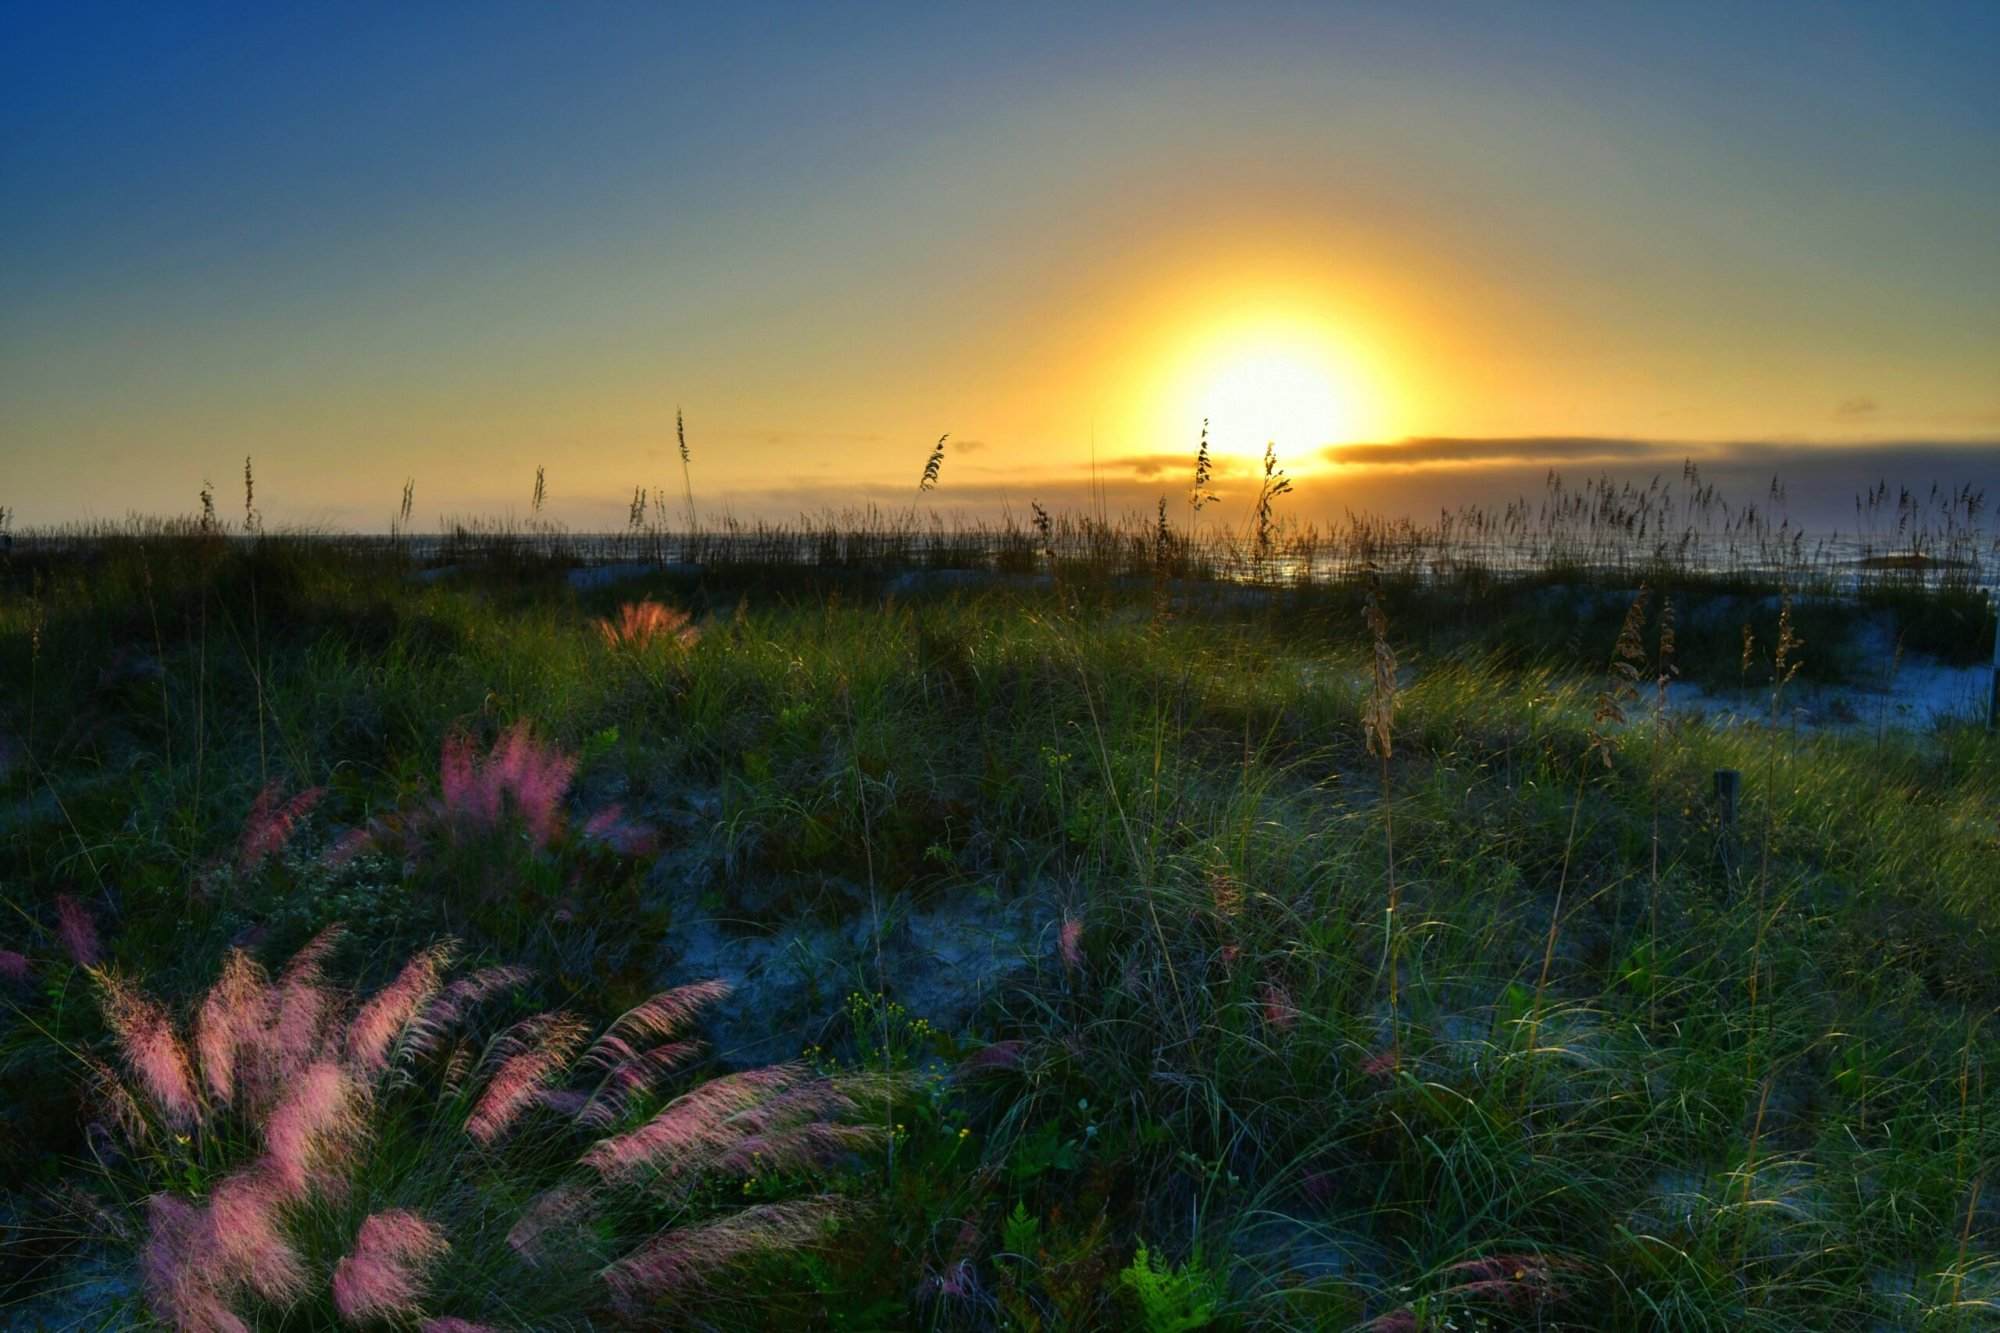 Beach sunrise at Hilton Head Island in North Carolina